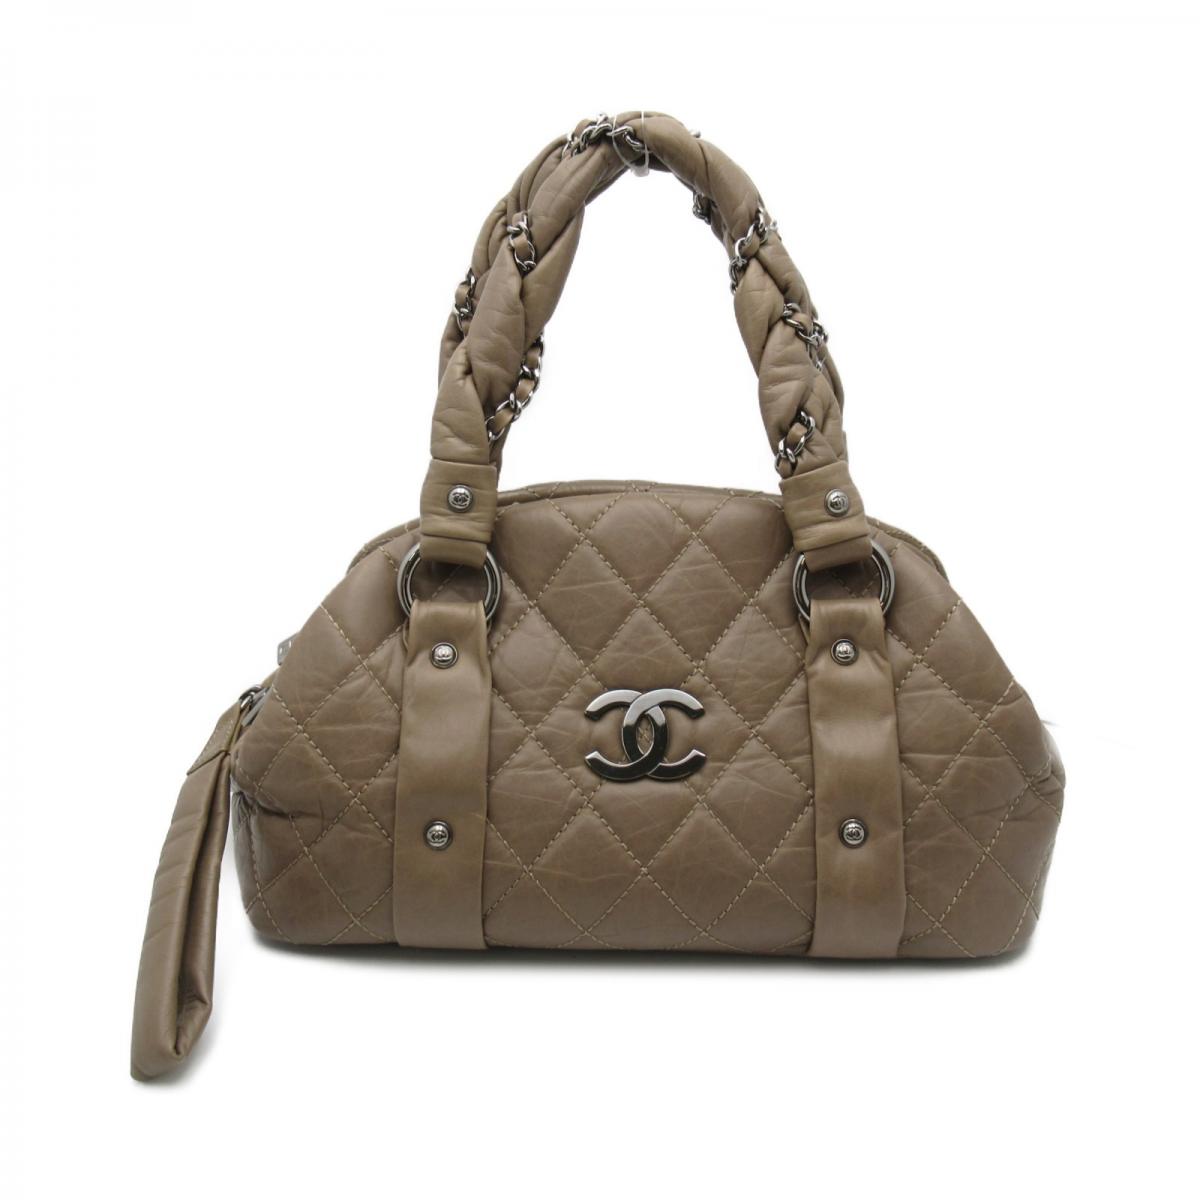 CC Quilted Leather Lady Braid Bowler Handbag